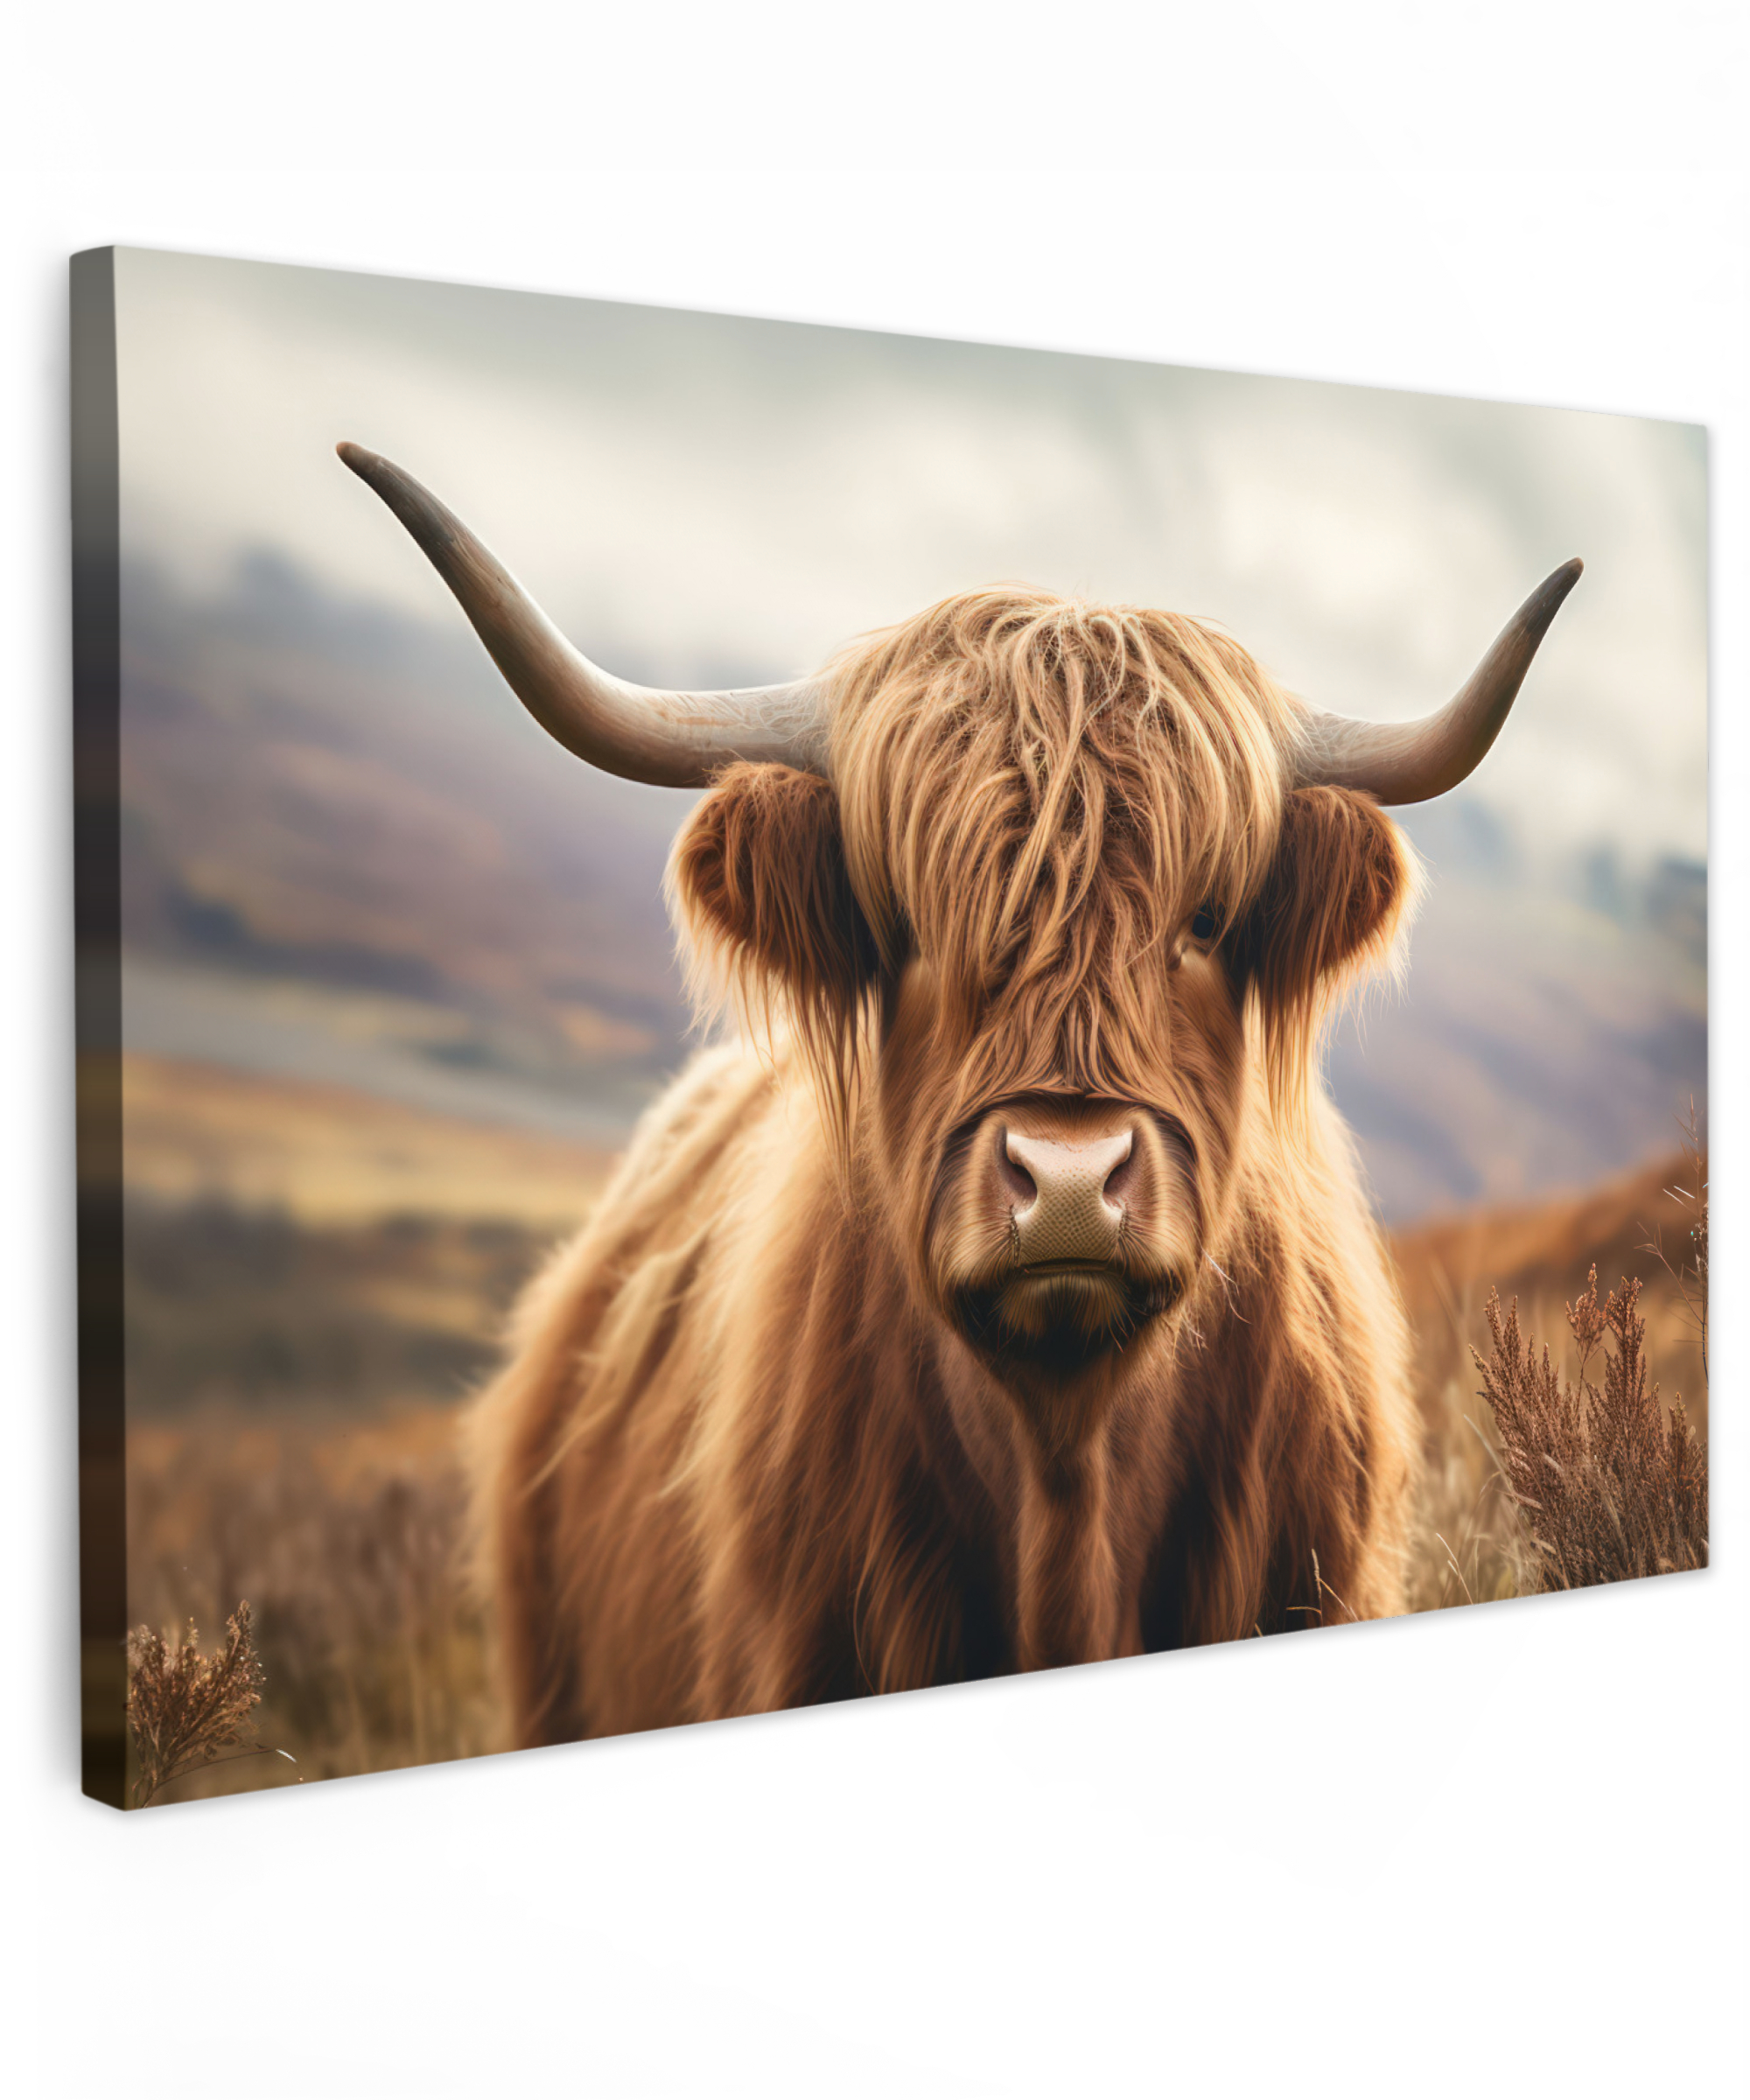 Leinwandbild - Schottischer Highlander - Landschaft - Tier